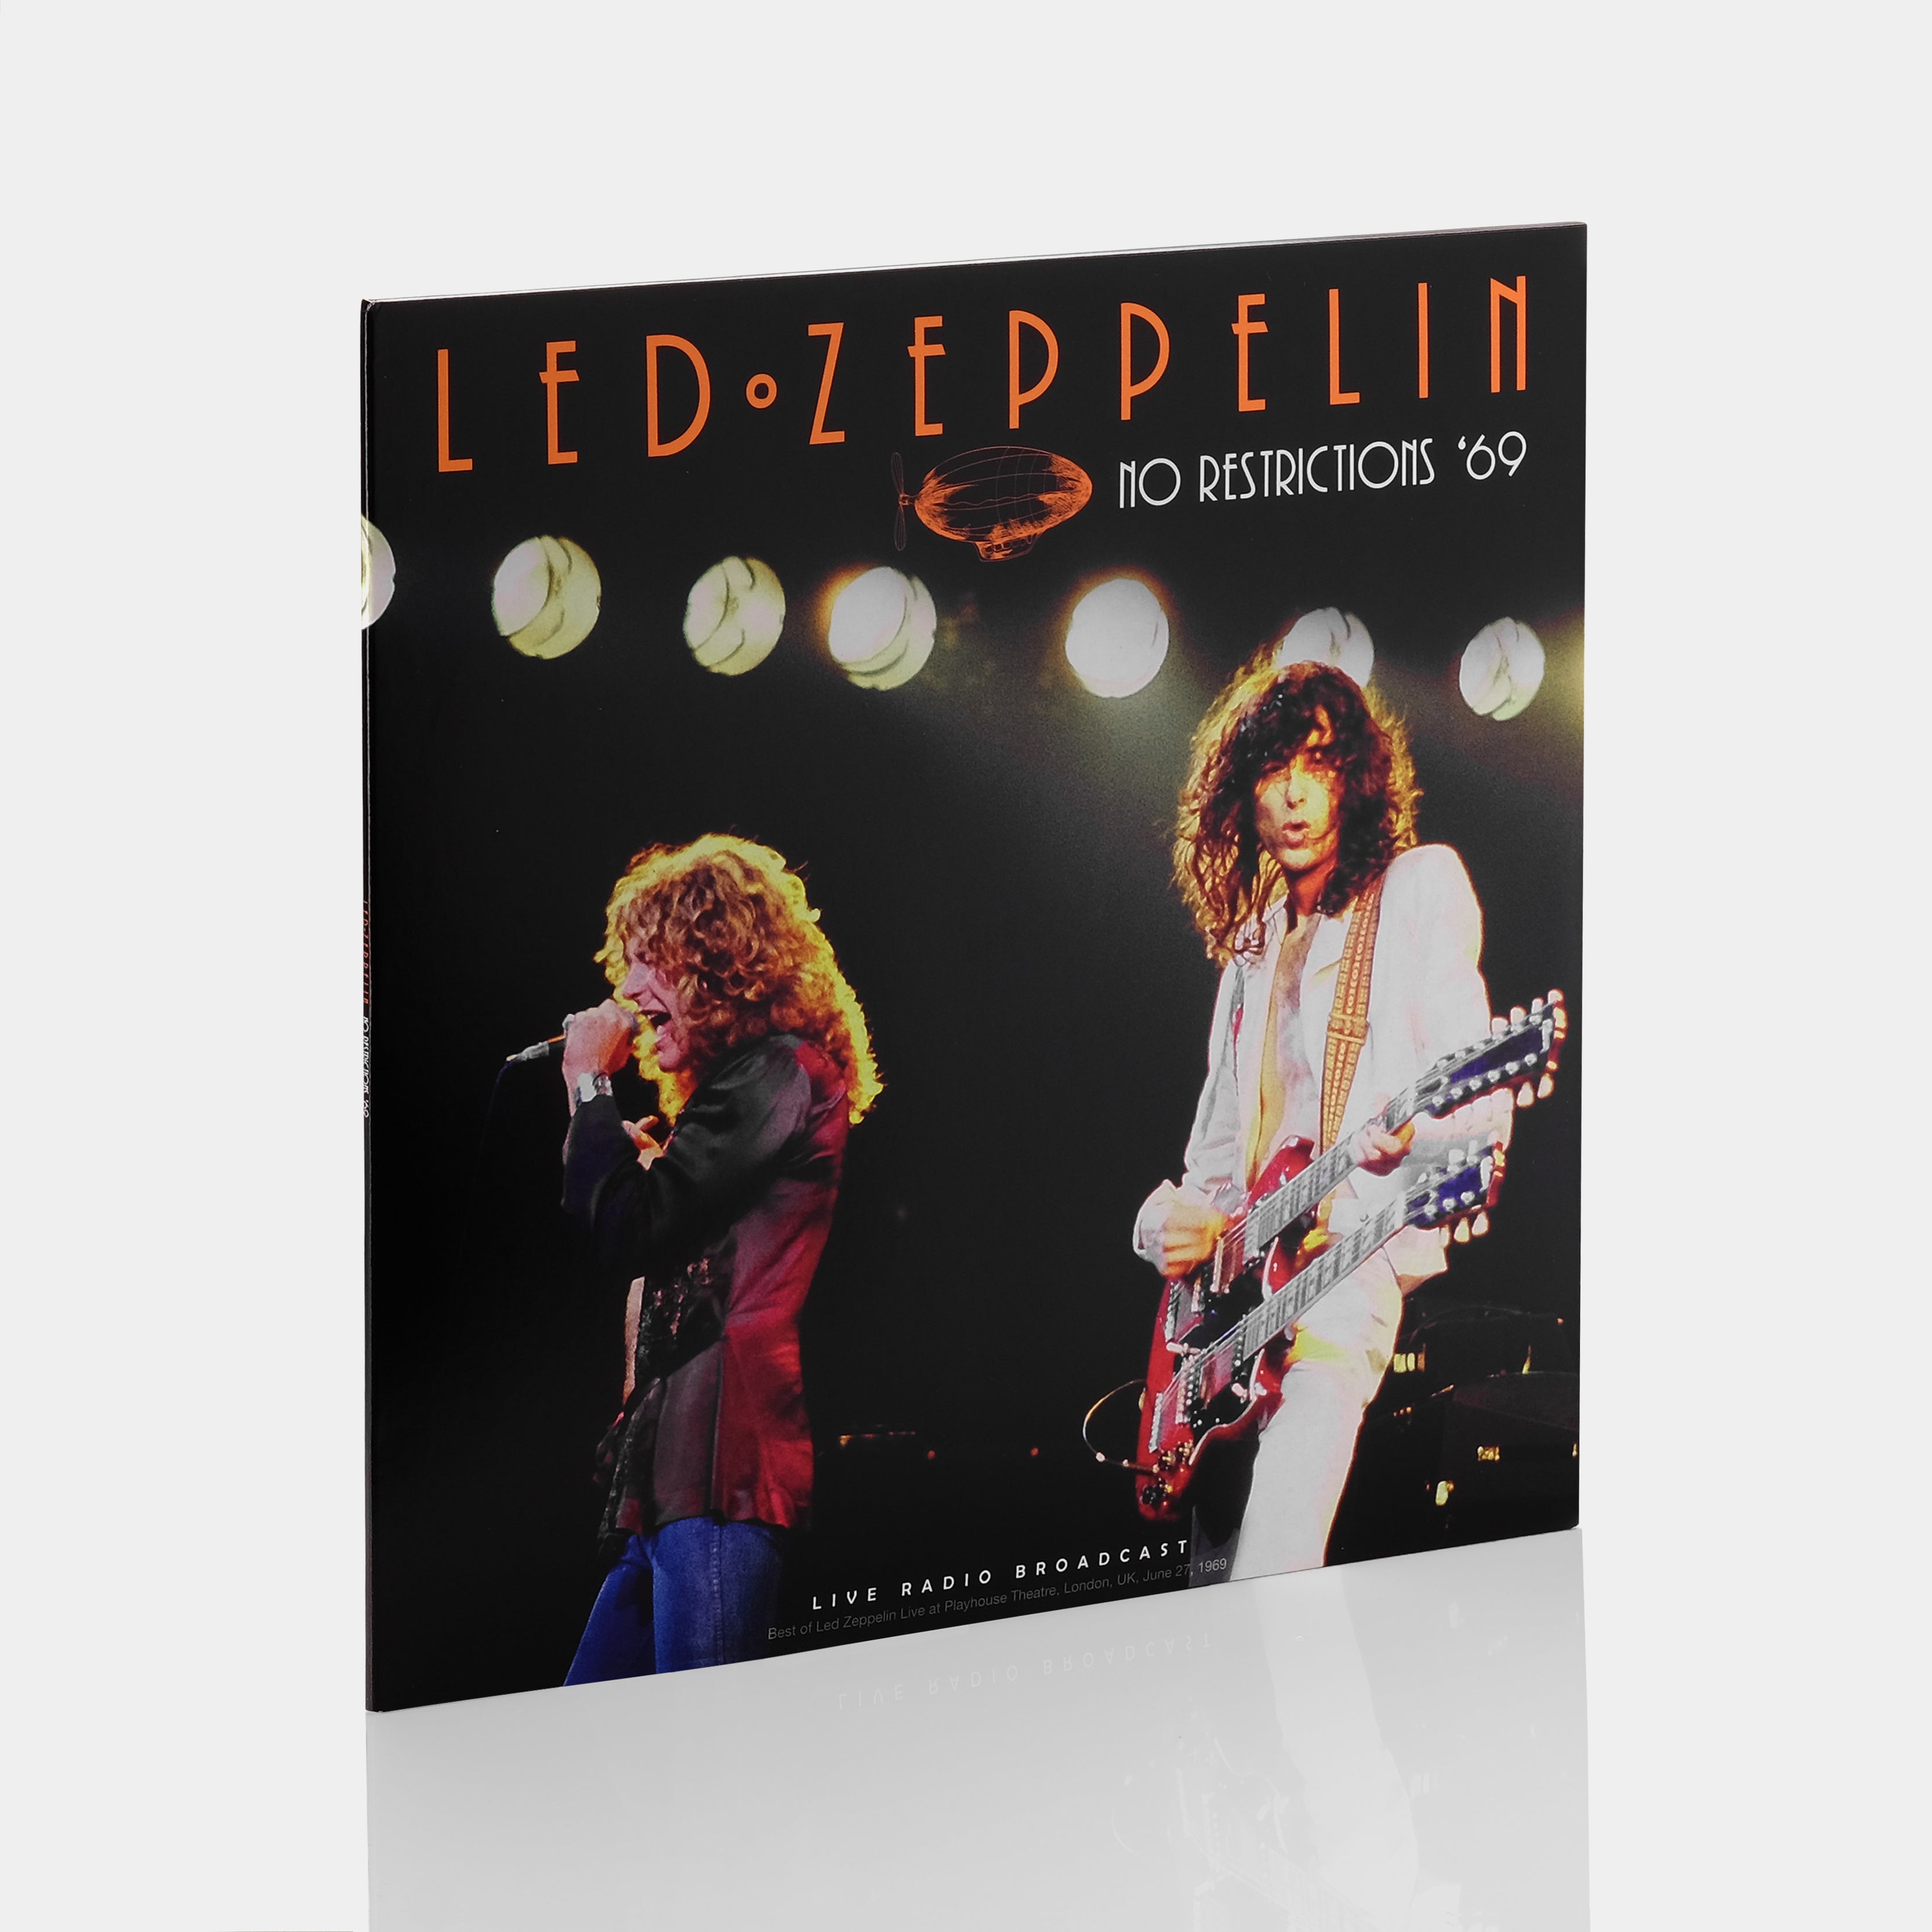 Led Zeppelin - No Restrictions '69 LP Vinyl Record